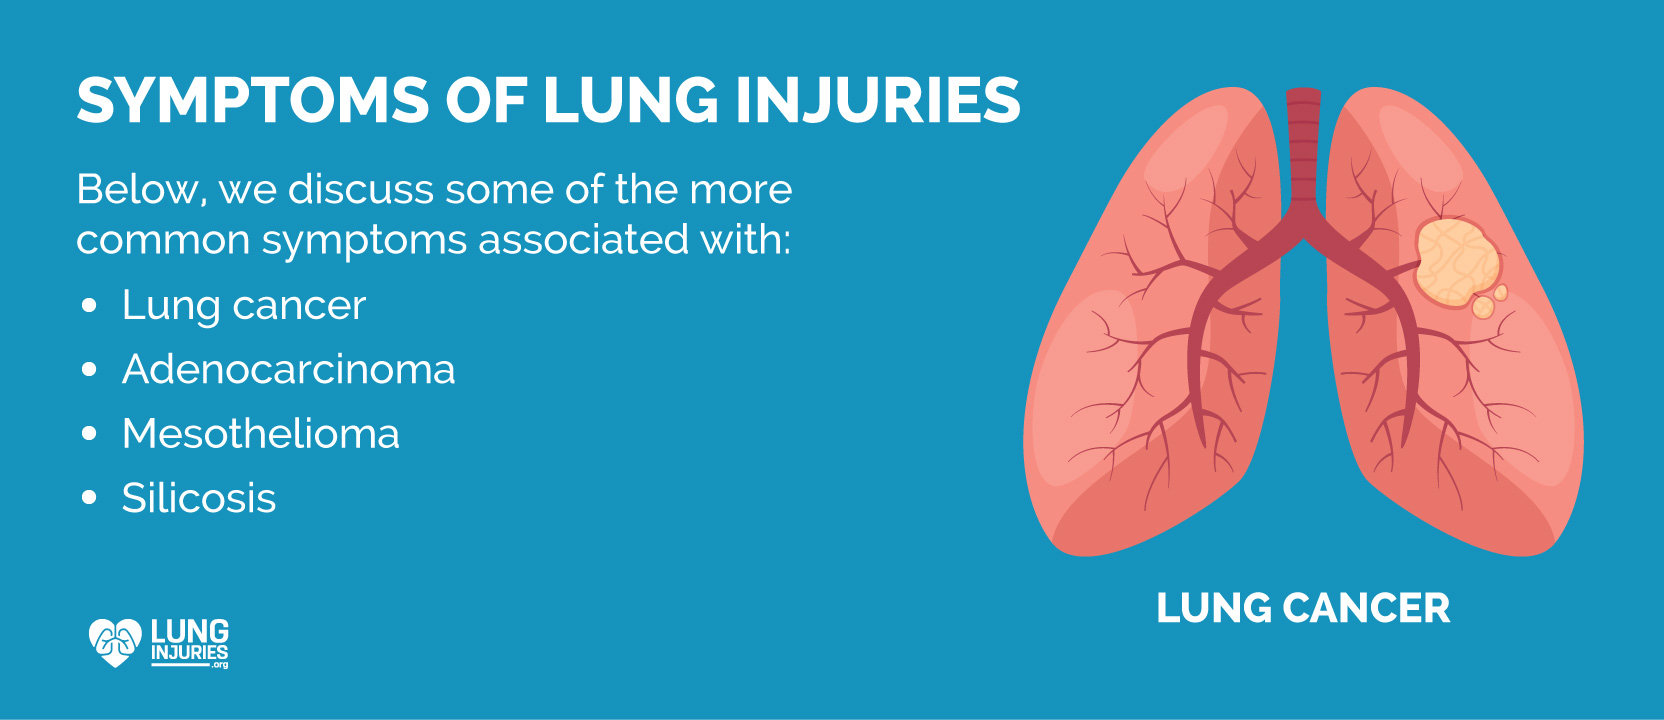 symptoms of lung injuries